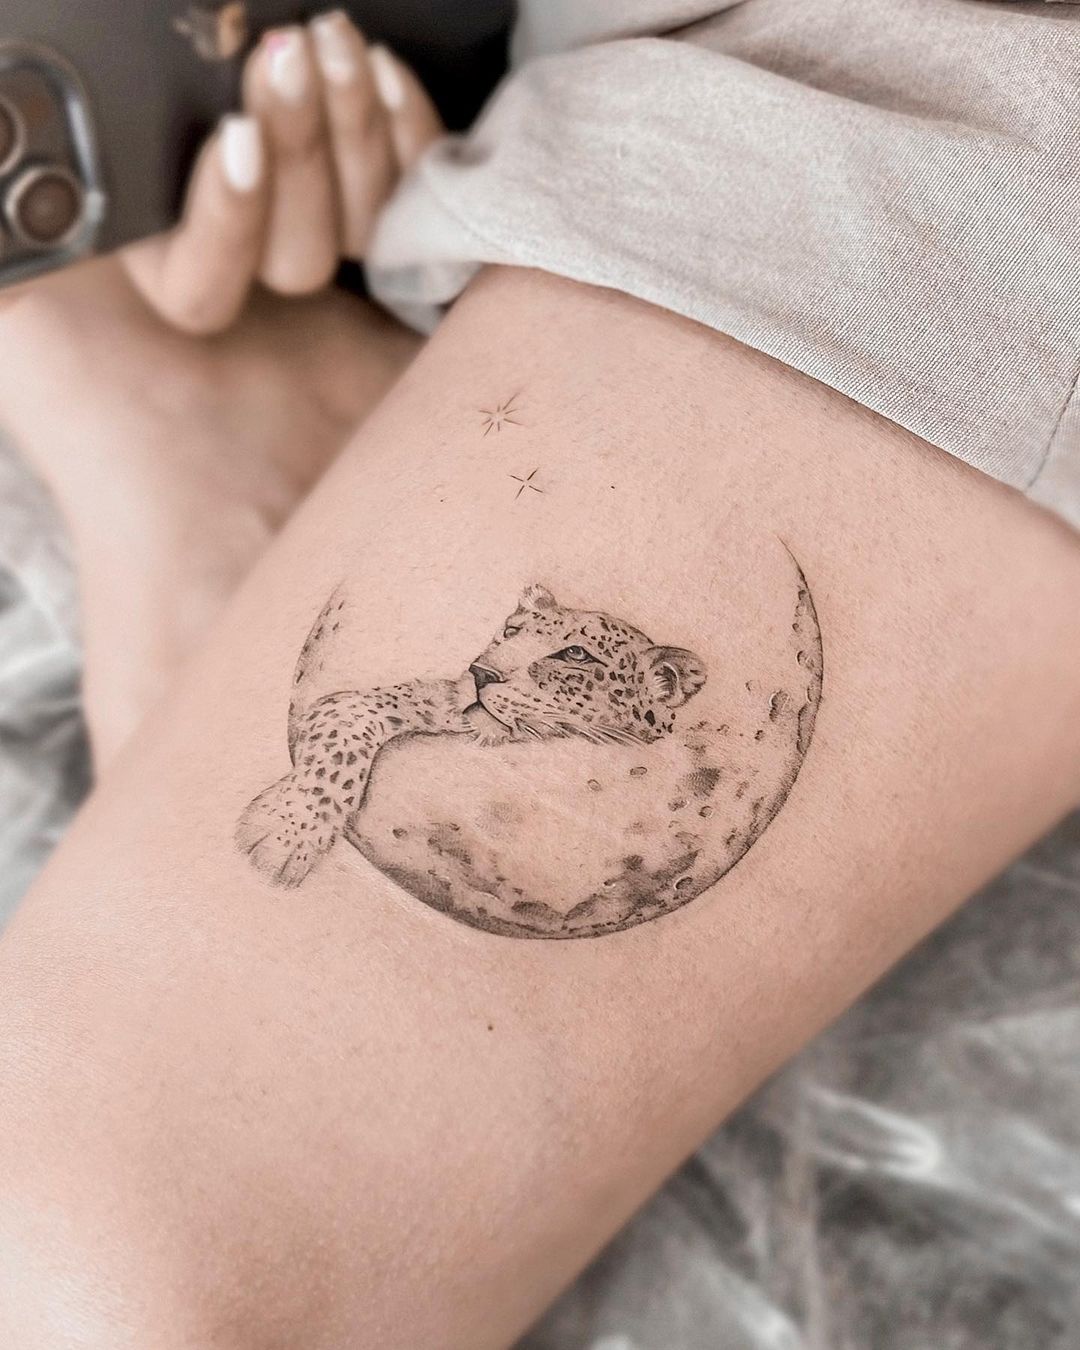 moon with animal tattoo by zeetattooo